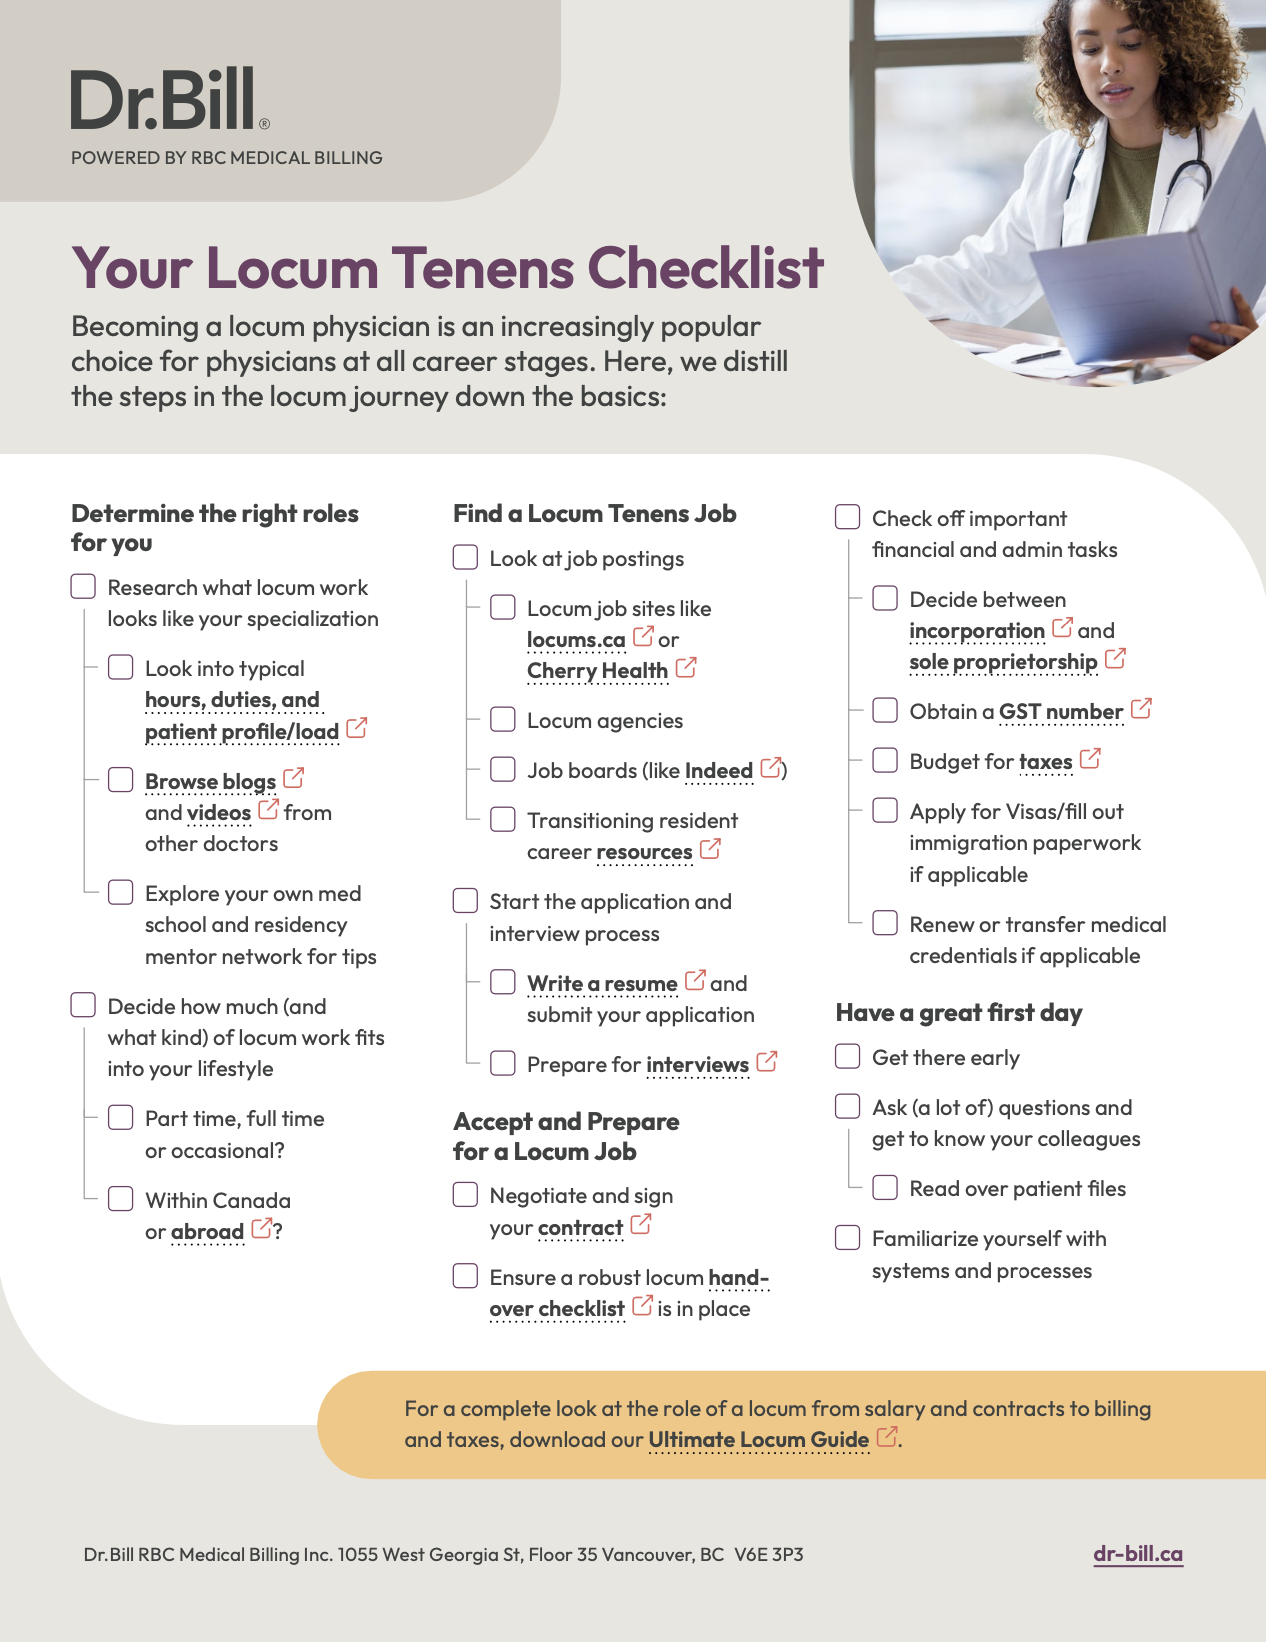 Becoming a Locum Tenens Physician - Checklist